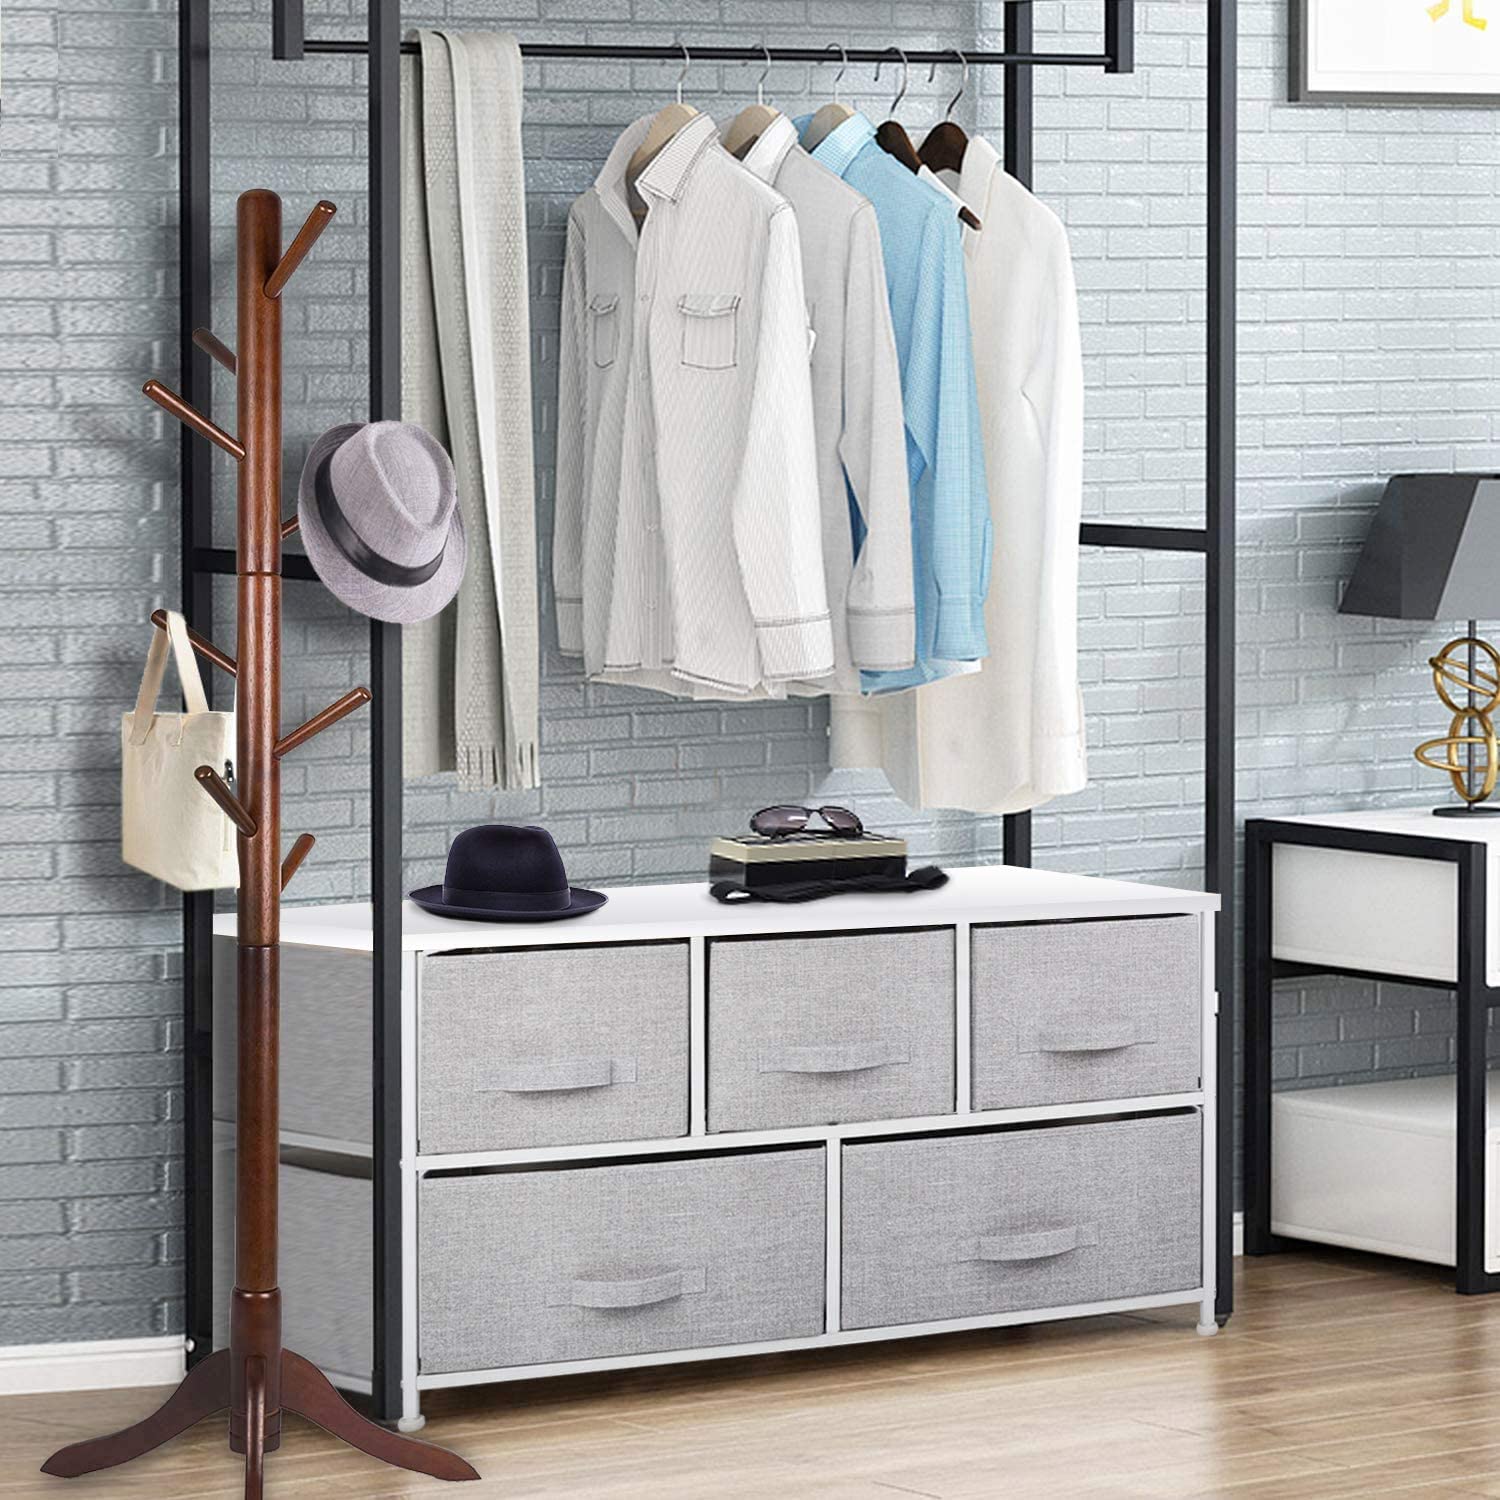 CERBIOR Storage Organizer Dresser for Clothing, Sweaters, Jeans, Blankets (5-Grey Drawers)